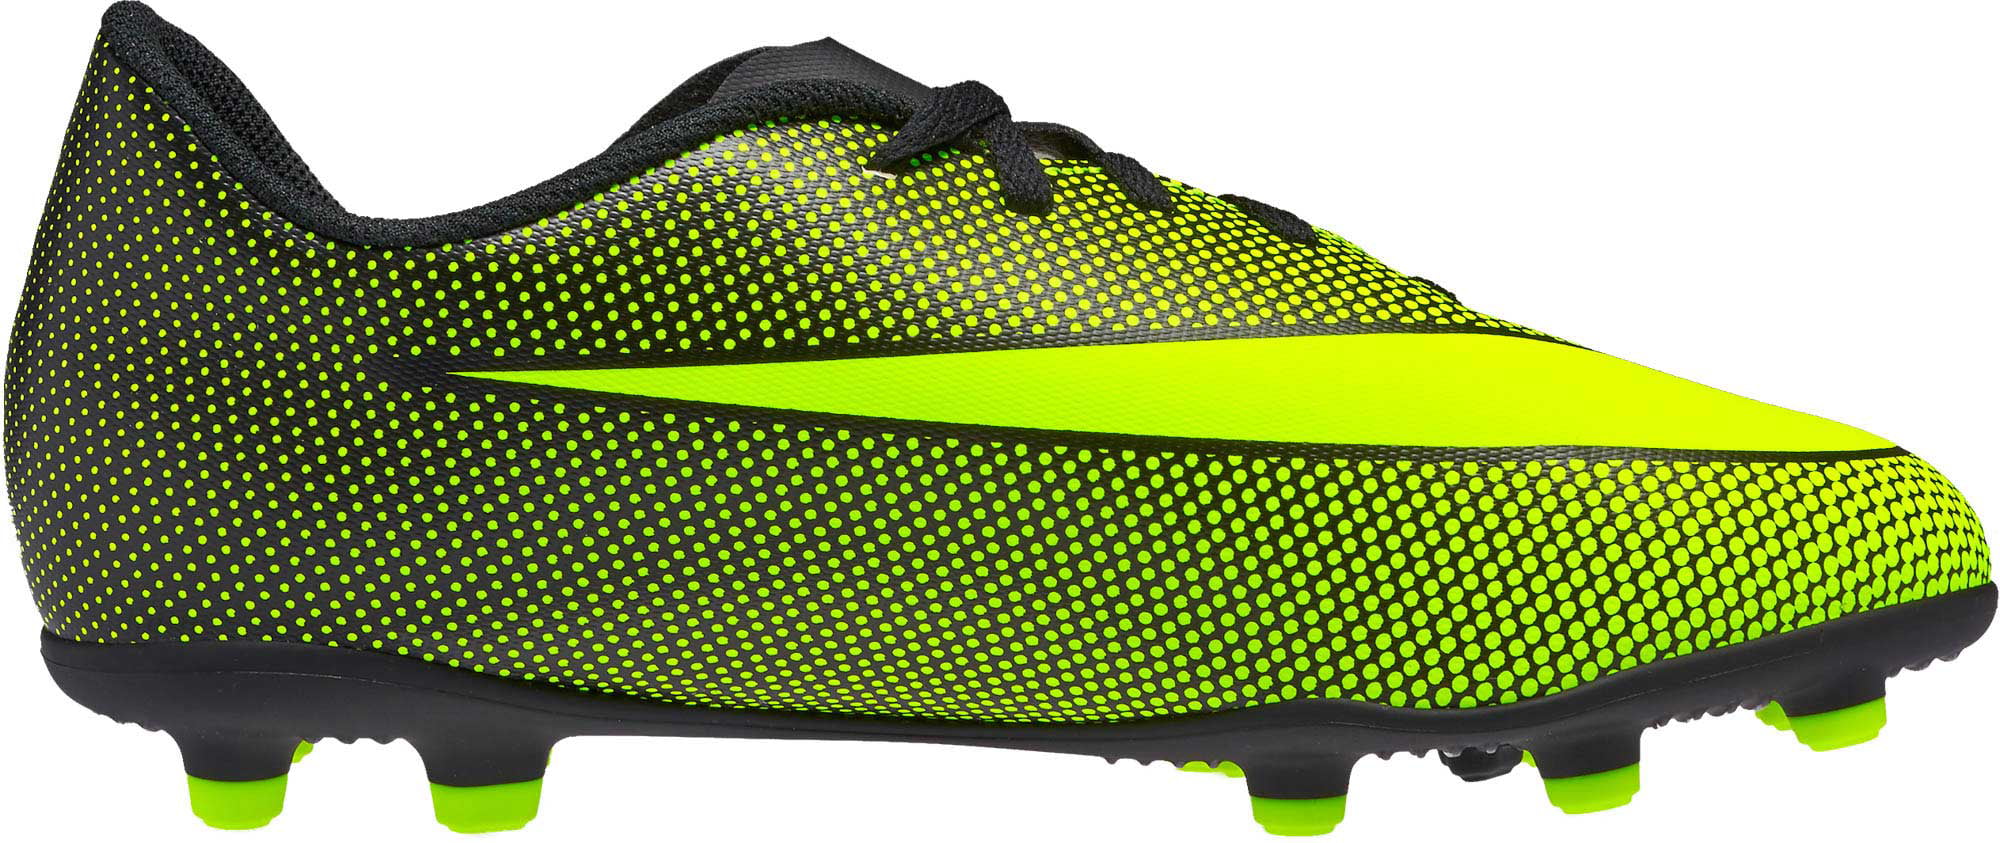 Nike Jr. II FG Soccer Cleat Walmart.com